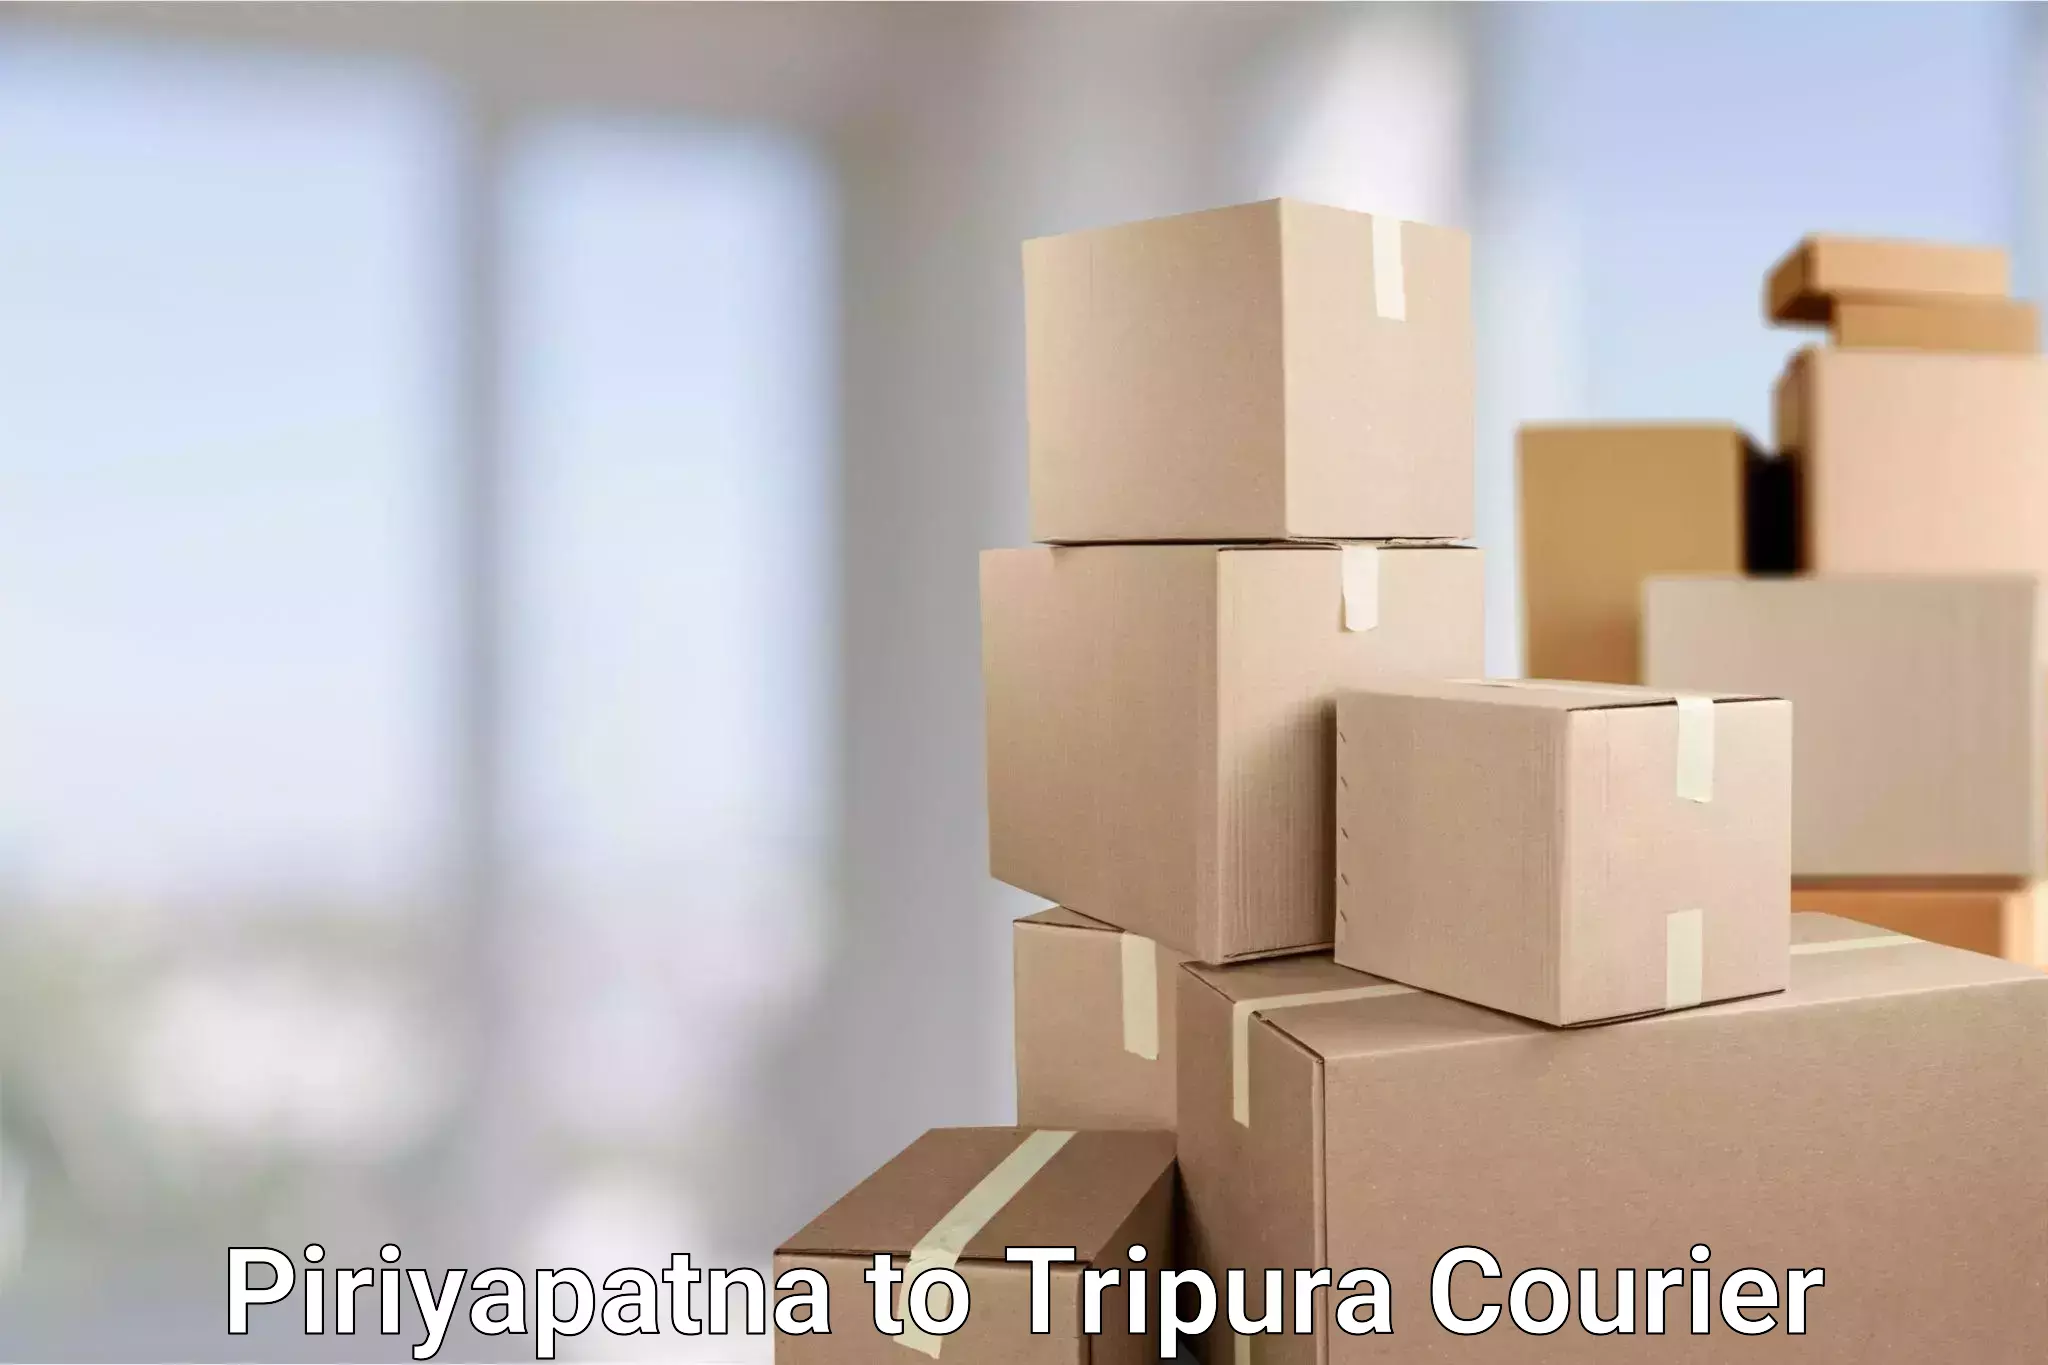 Smart courier technologies Piriyapatna to Udaipur Tripura